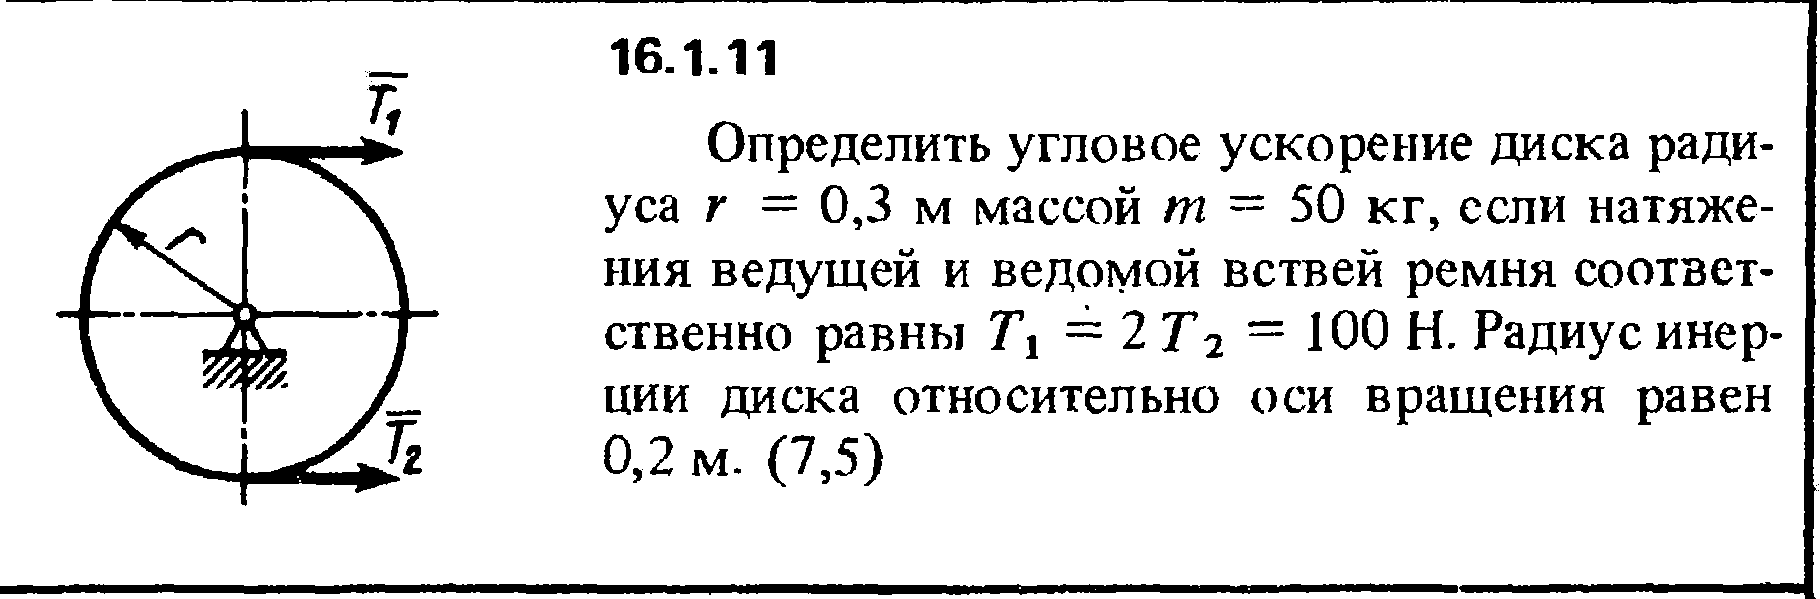 Решение задачи 16.1.11 из сборника Кепе О.Е. 1989 года